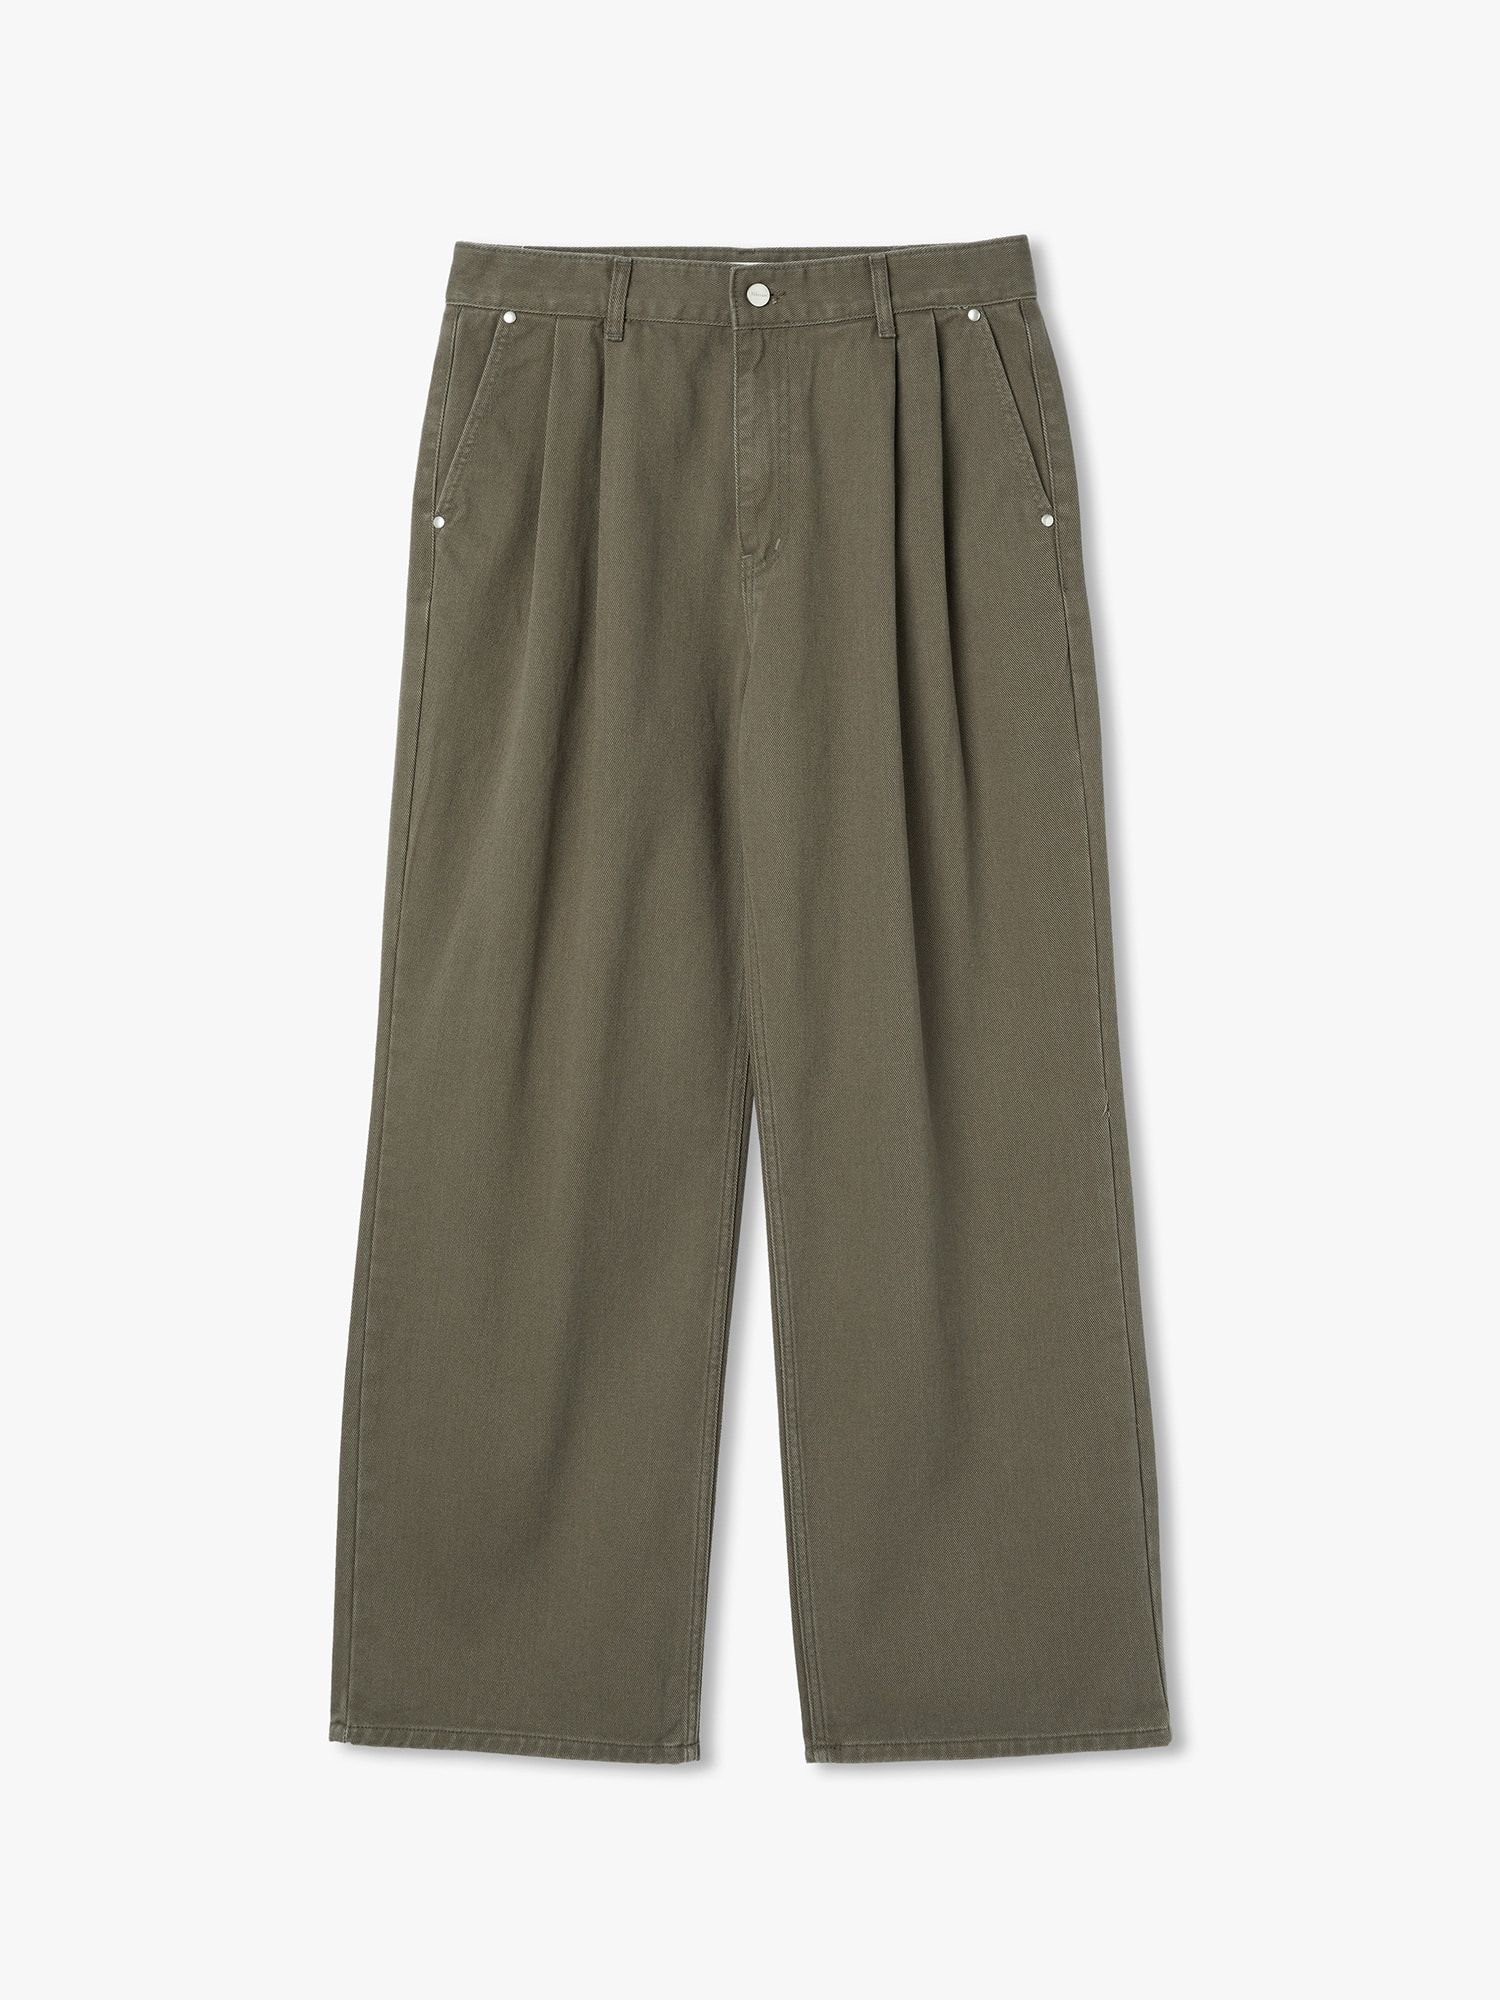 French Two Tuck Chino Pants (Khaki Brown)